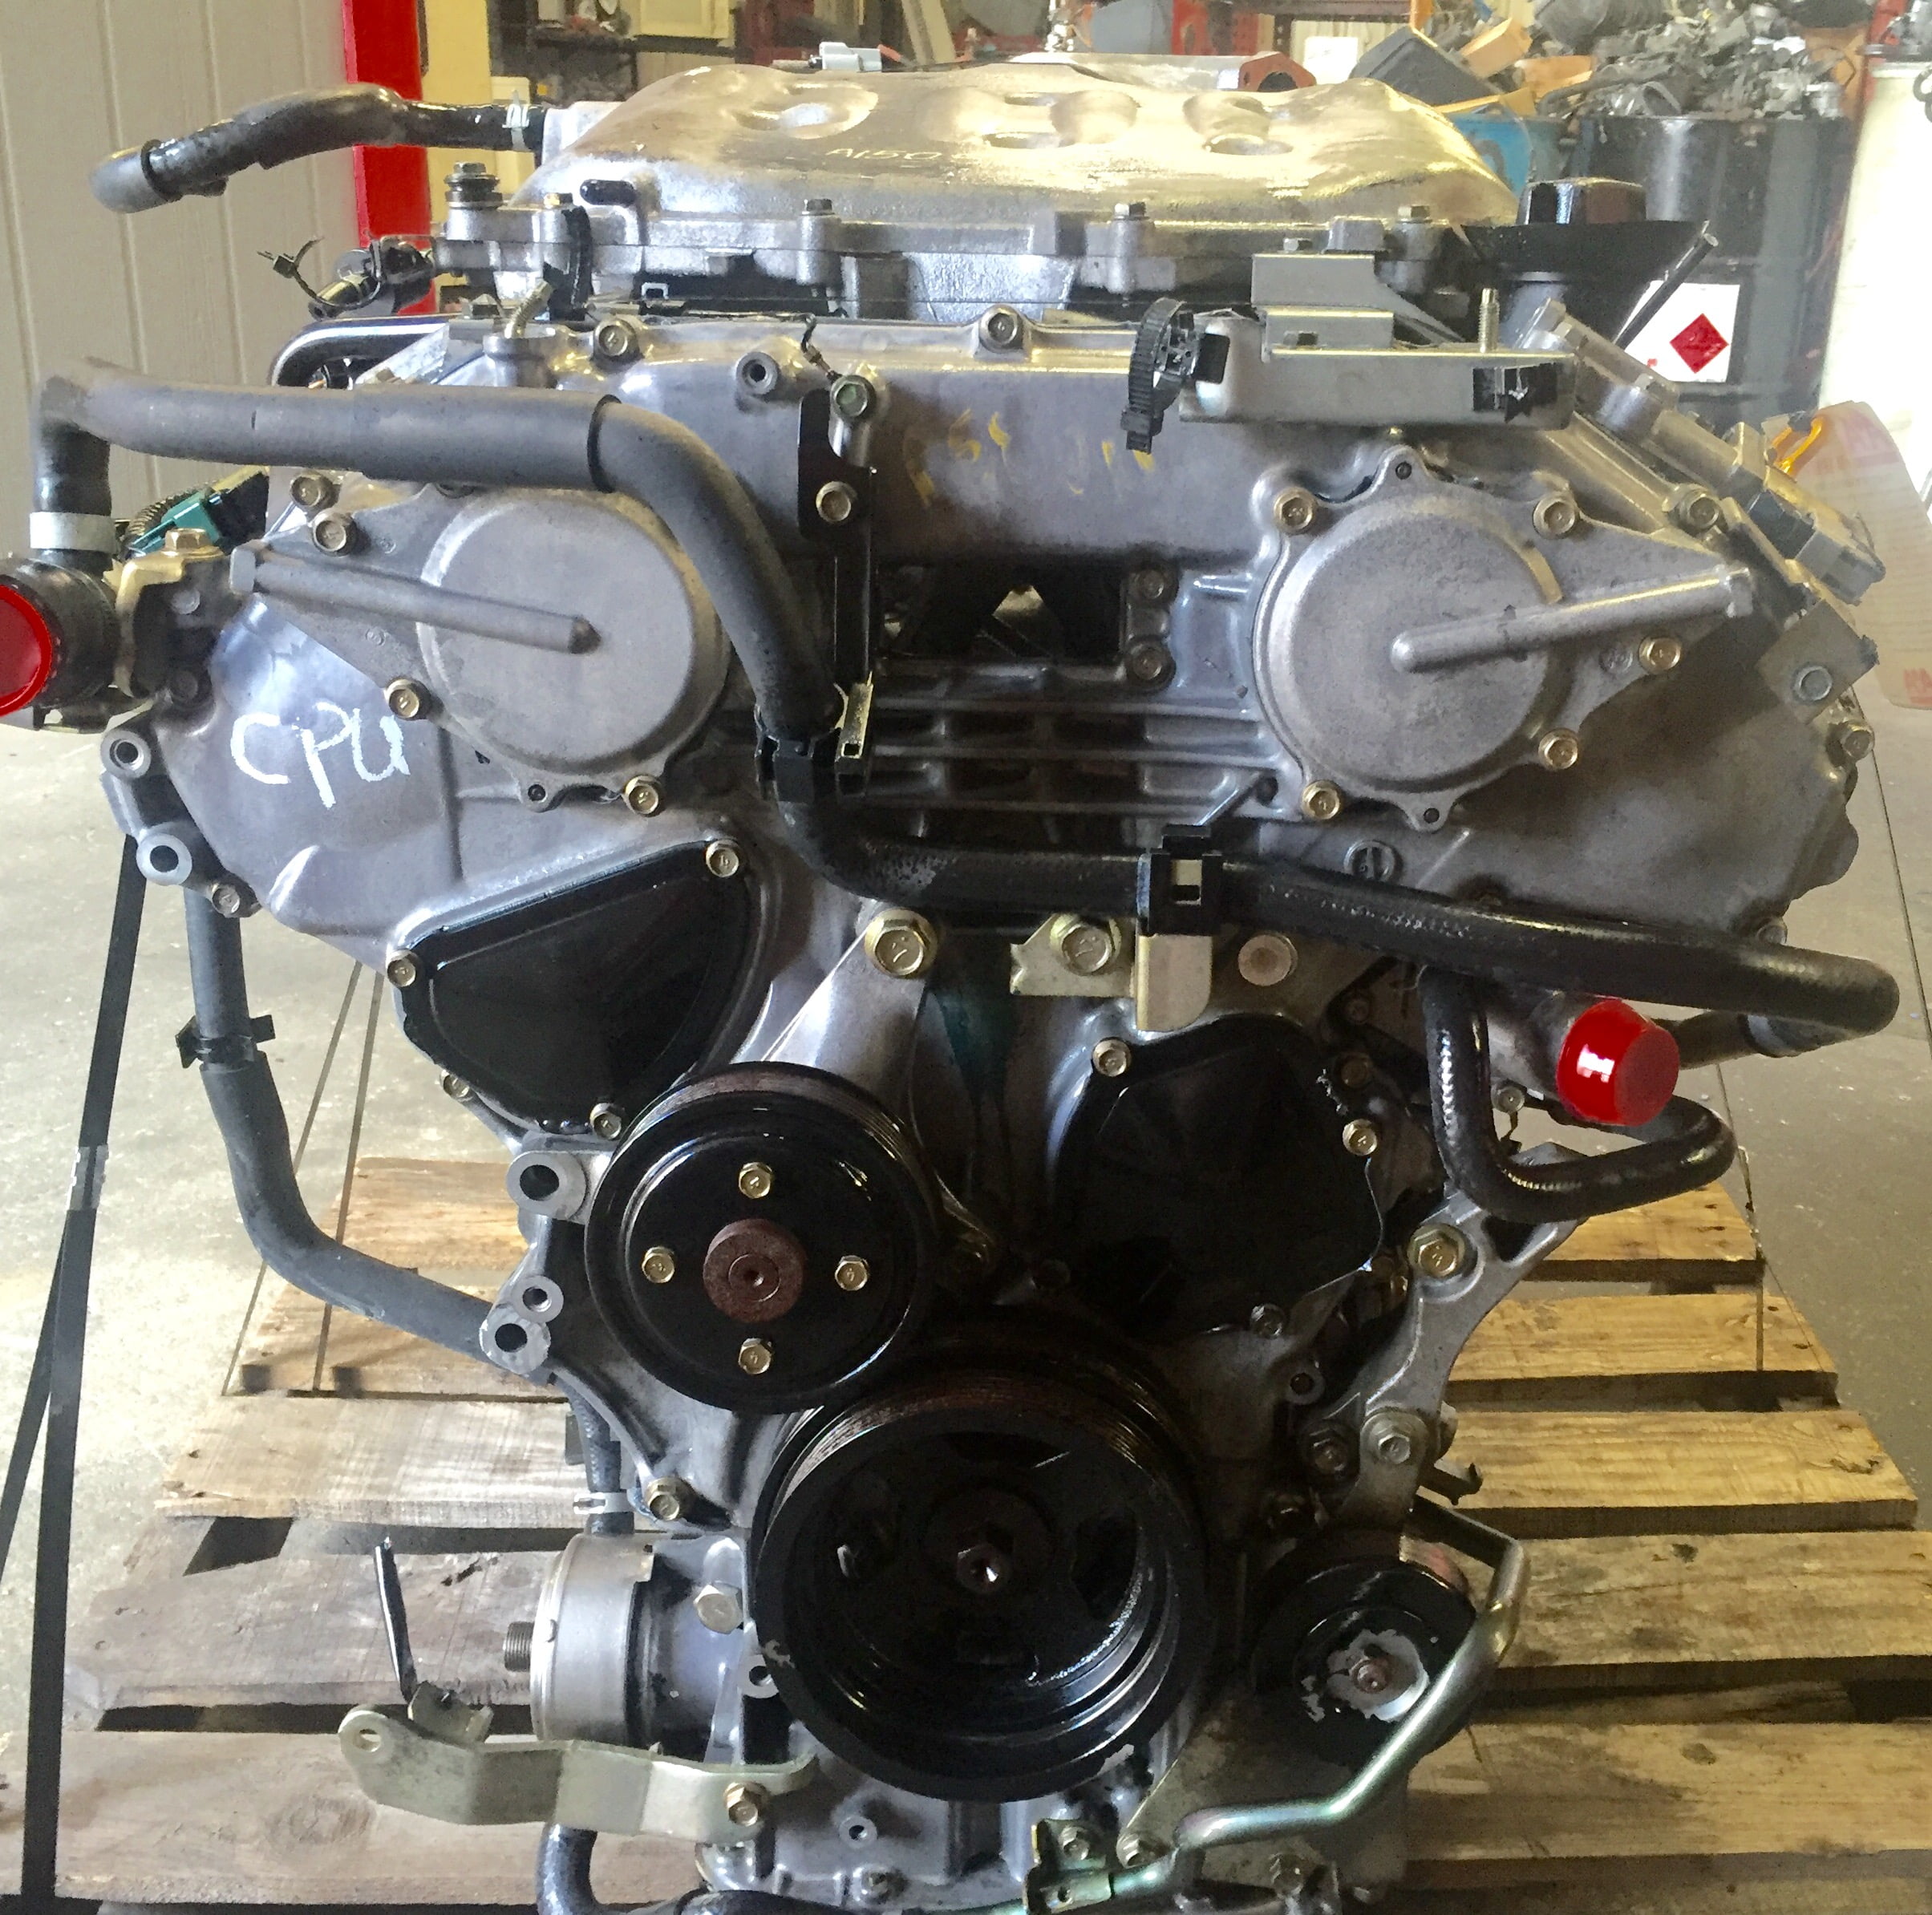 Infinity G35 2DR Engine 3.5L 2003 – 2004